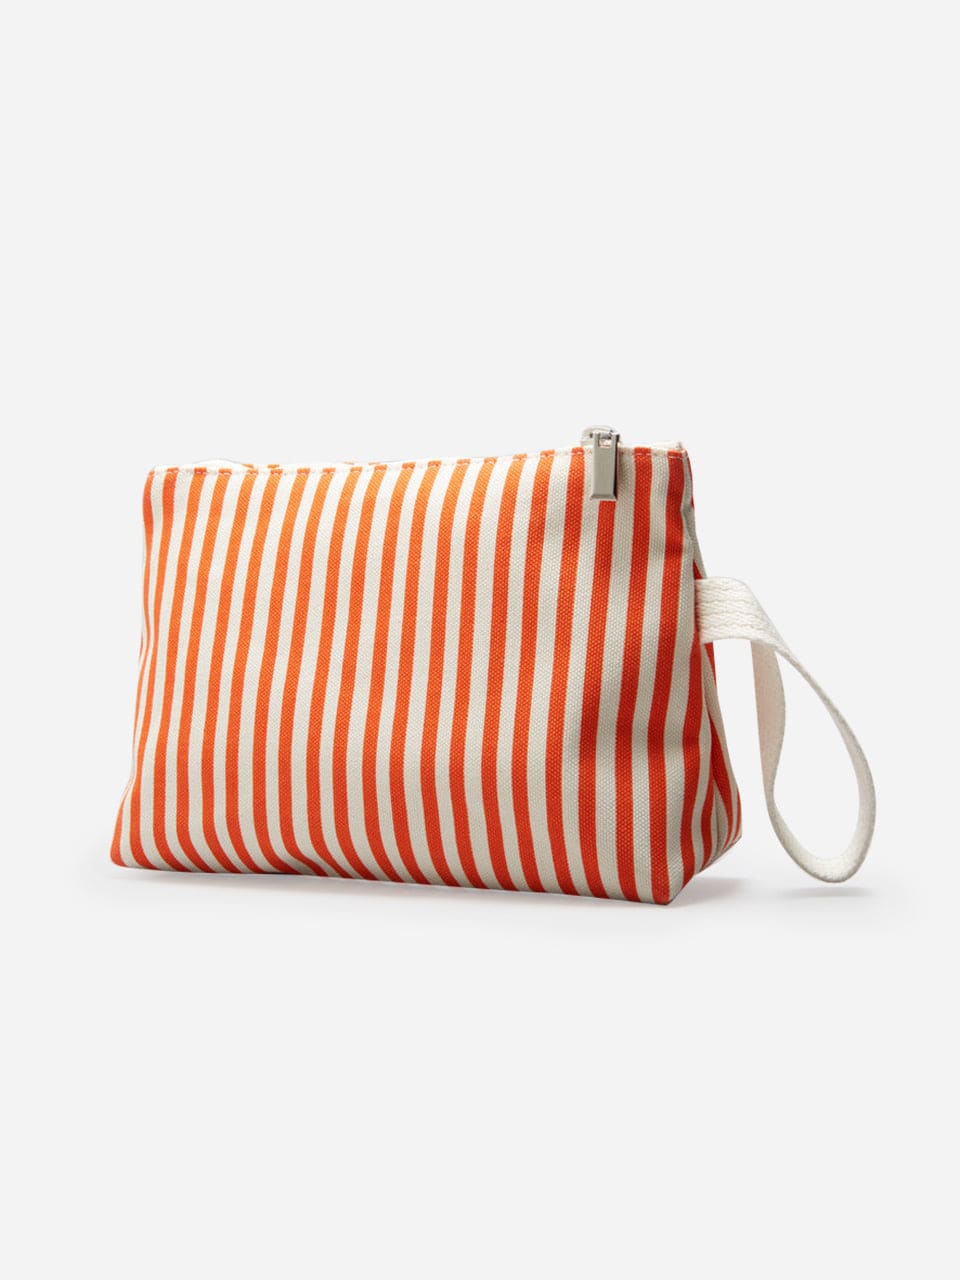 Italian Cotton Striped Red Clutch Bag Greta - 03